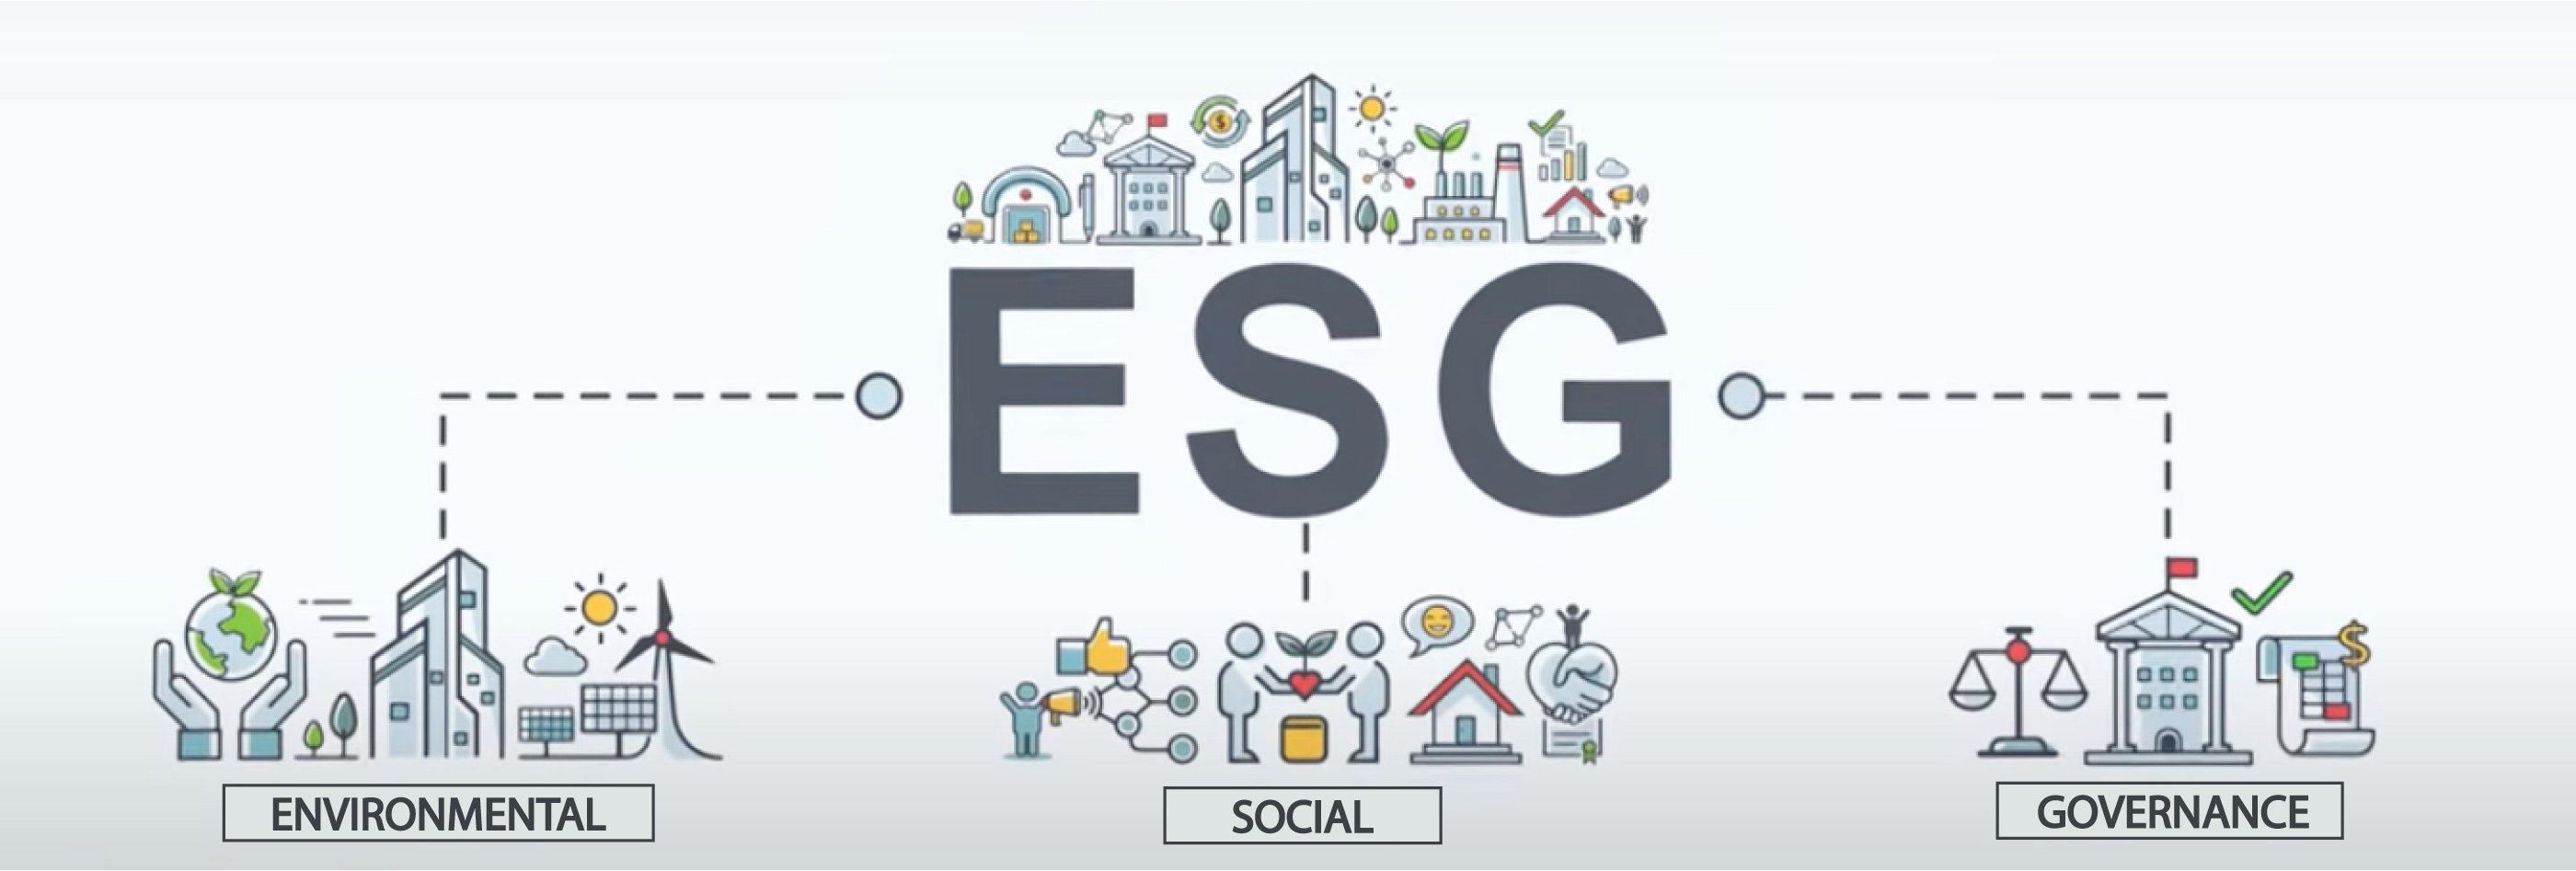 ESG summary